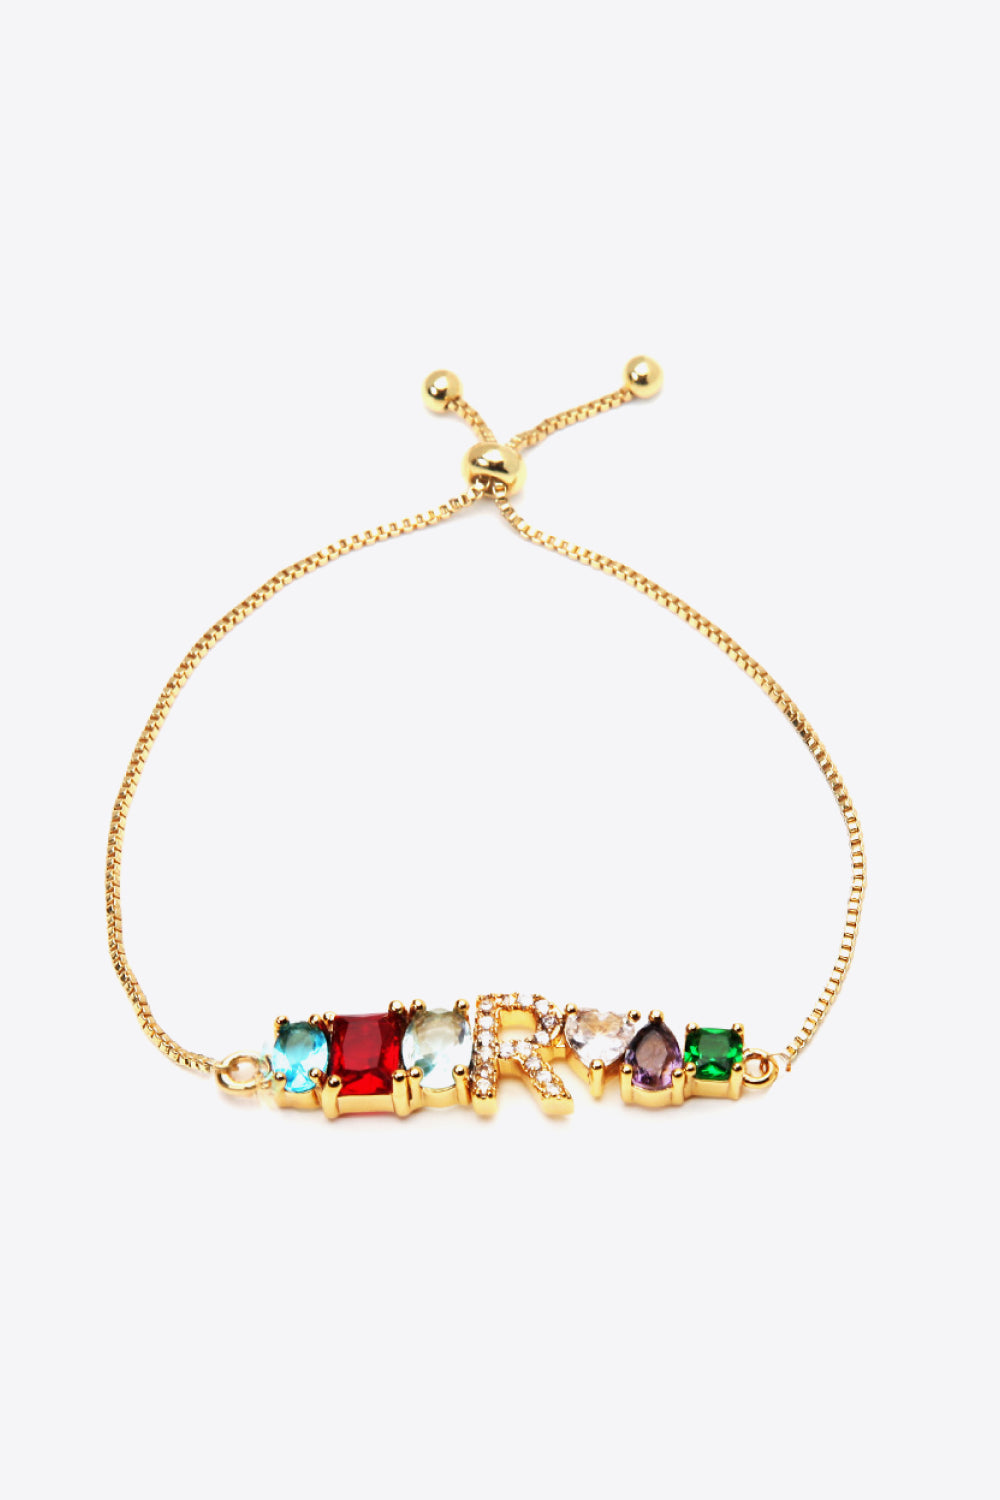 K to T Zircon Bracelet - R / One Size - Women’s Jewelry - Bracelets - 22 - 2024